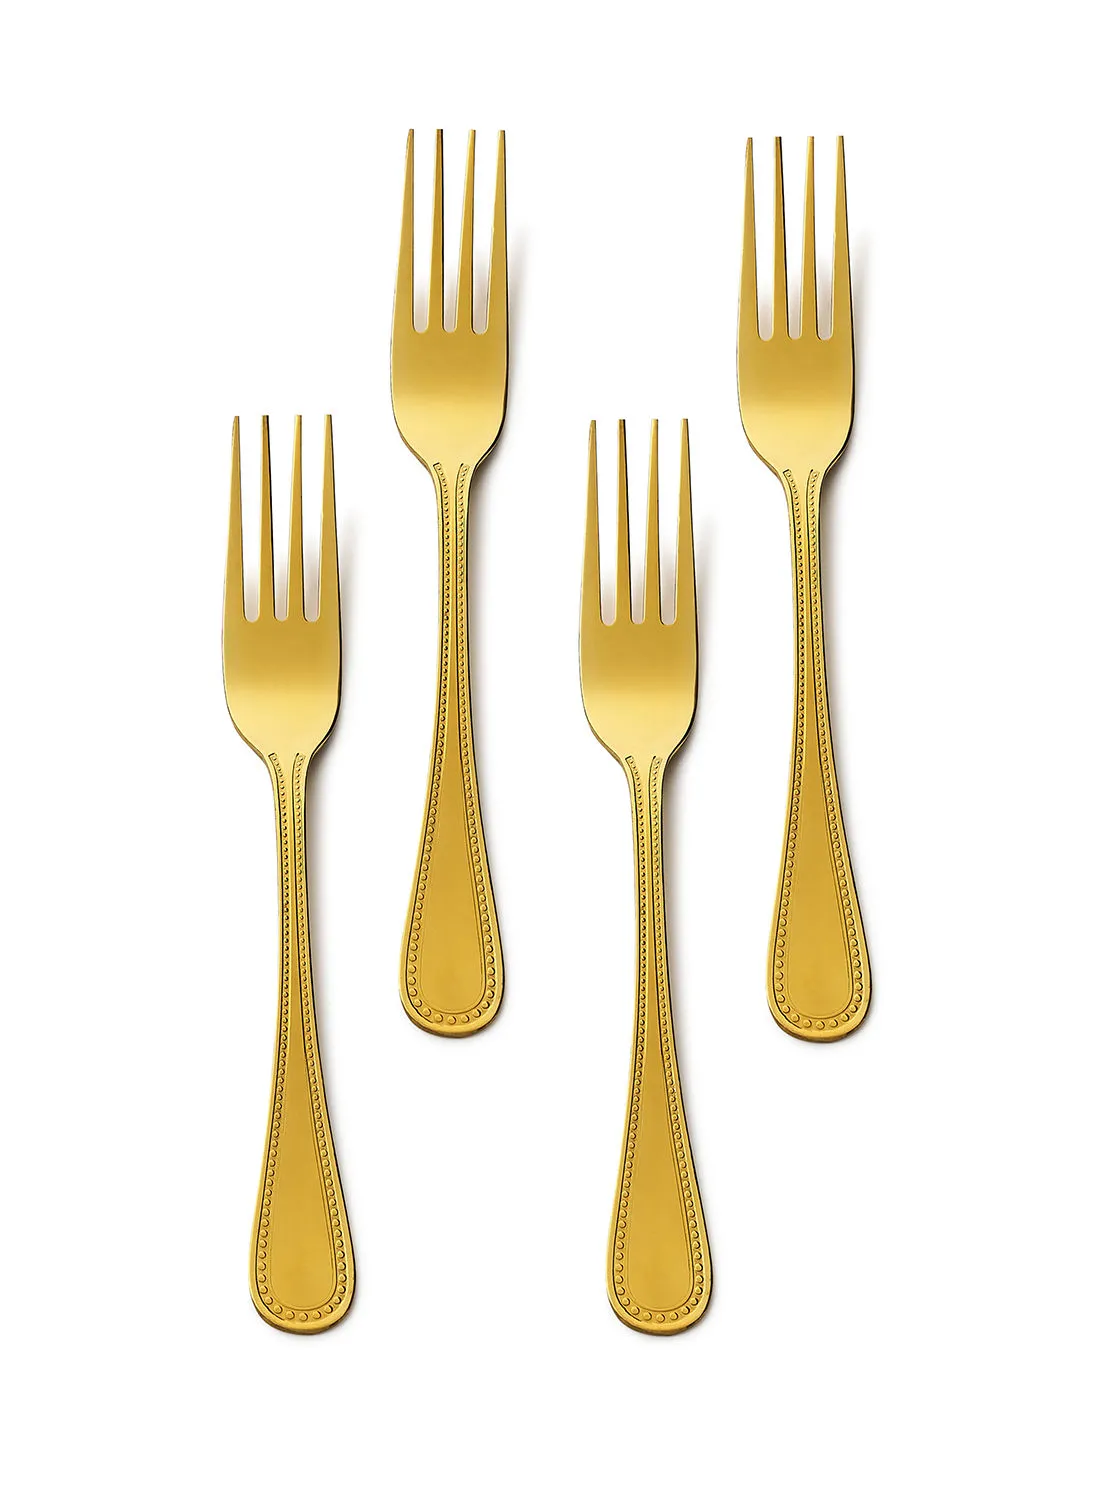 Amal 4 Piece Forks Set - Made Of Stainless Steel - Silverware Flatware - Fork Set - Serves 4 - Design Gold Mallow